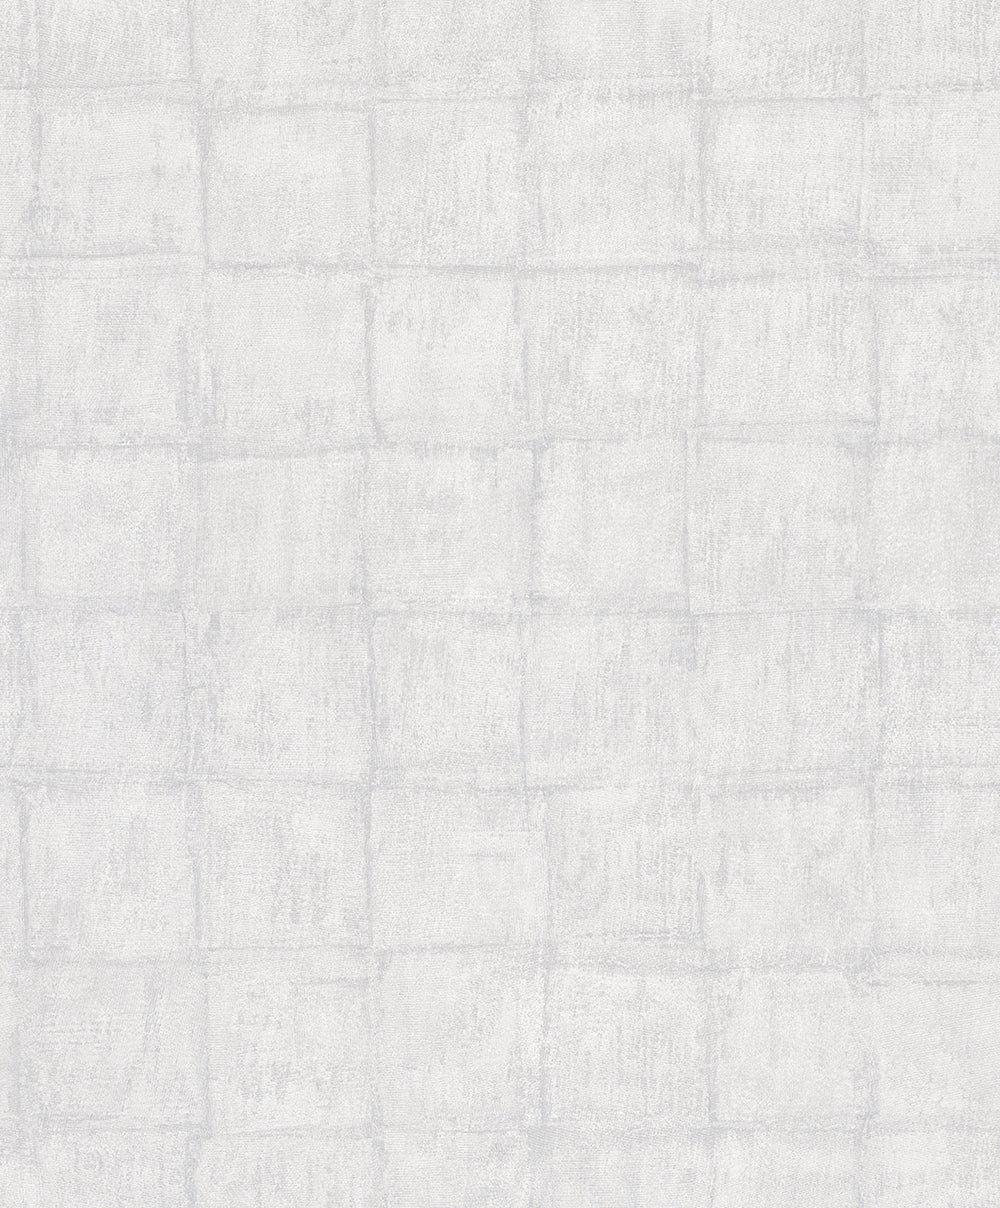 Botanica - Textured Tile industrial wallpaper Marburg Roll Light Grey  33968 